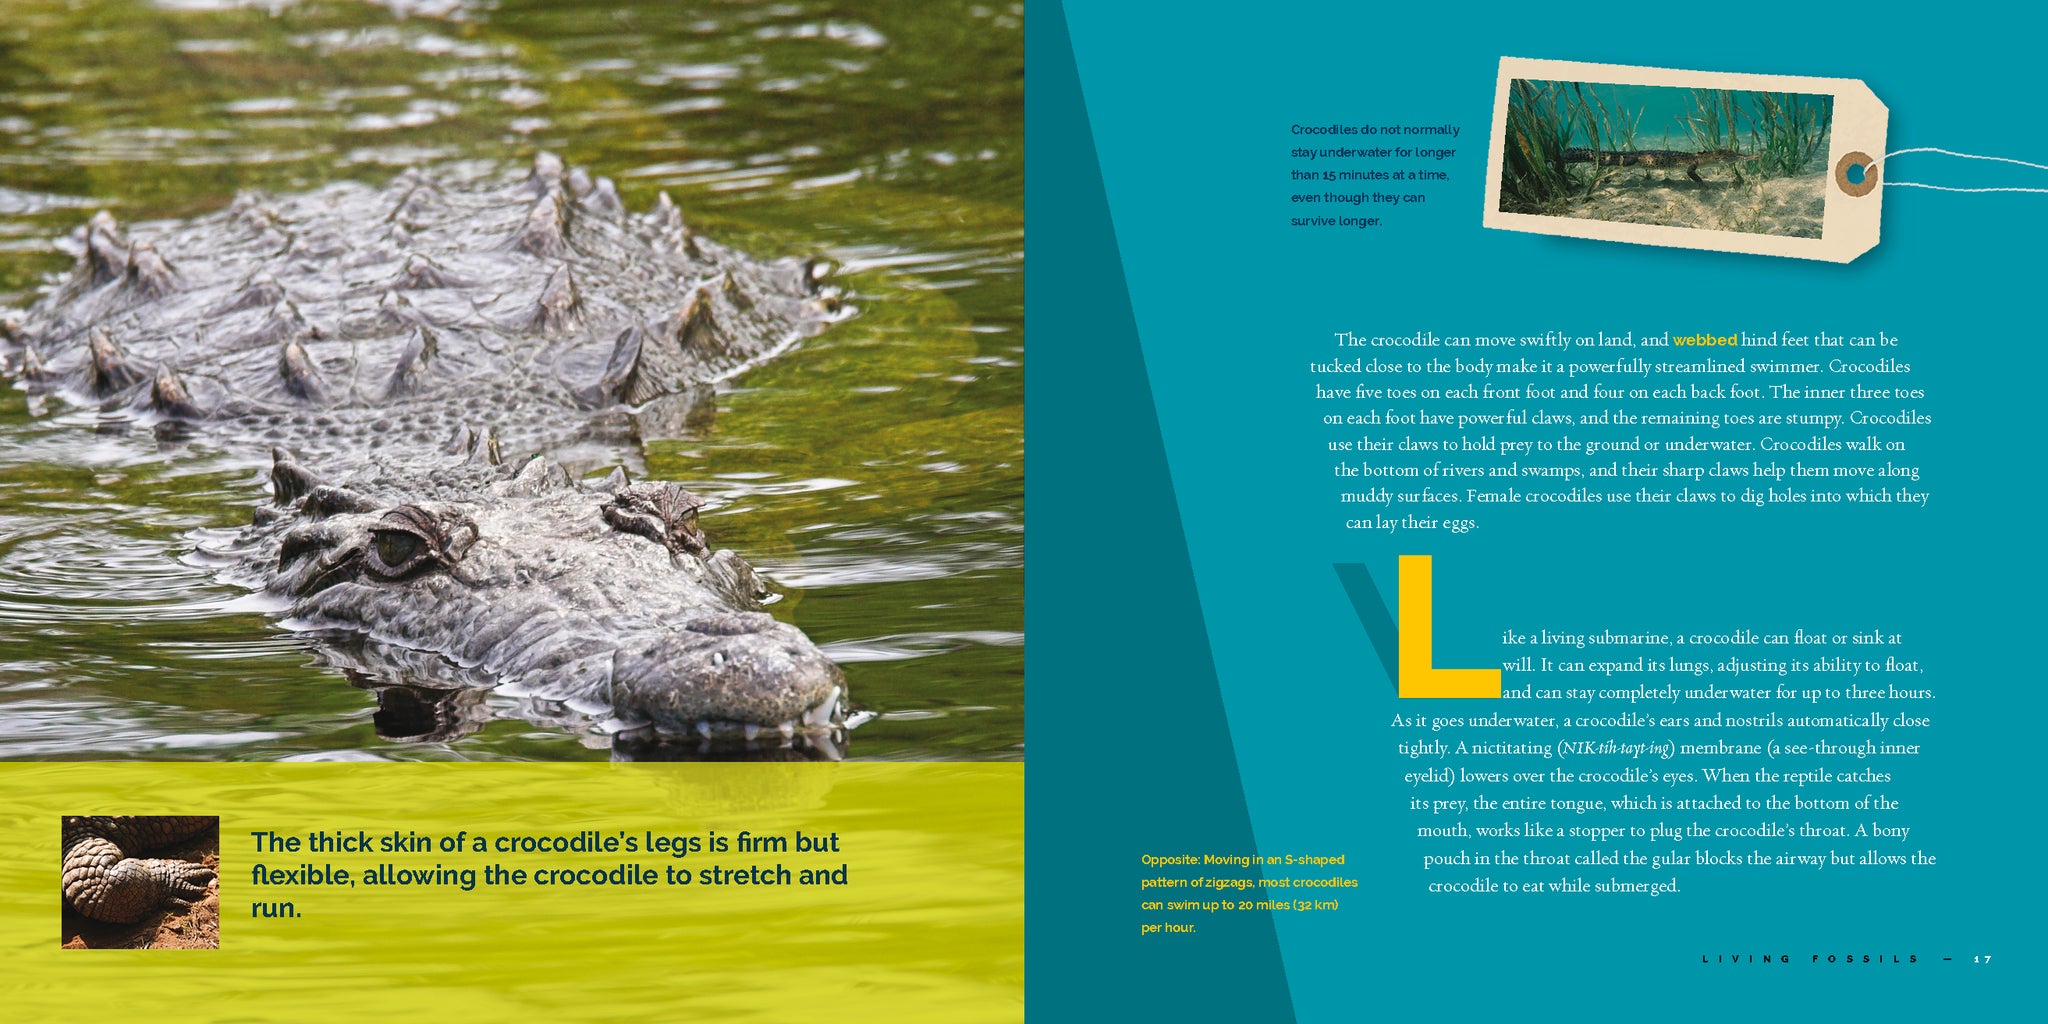 Despite their thick skins, alligators and crocodiles are